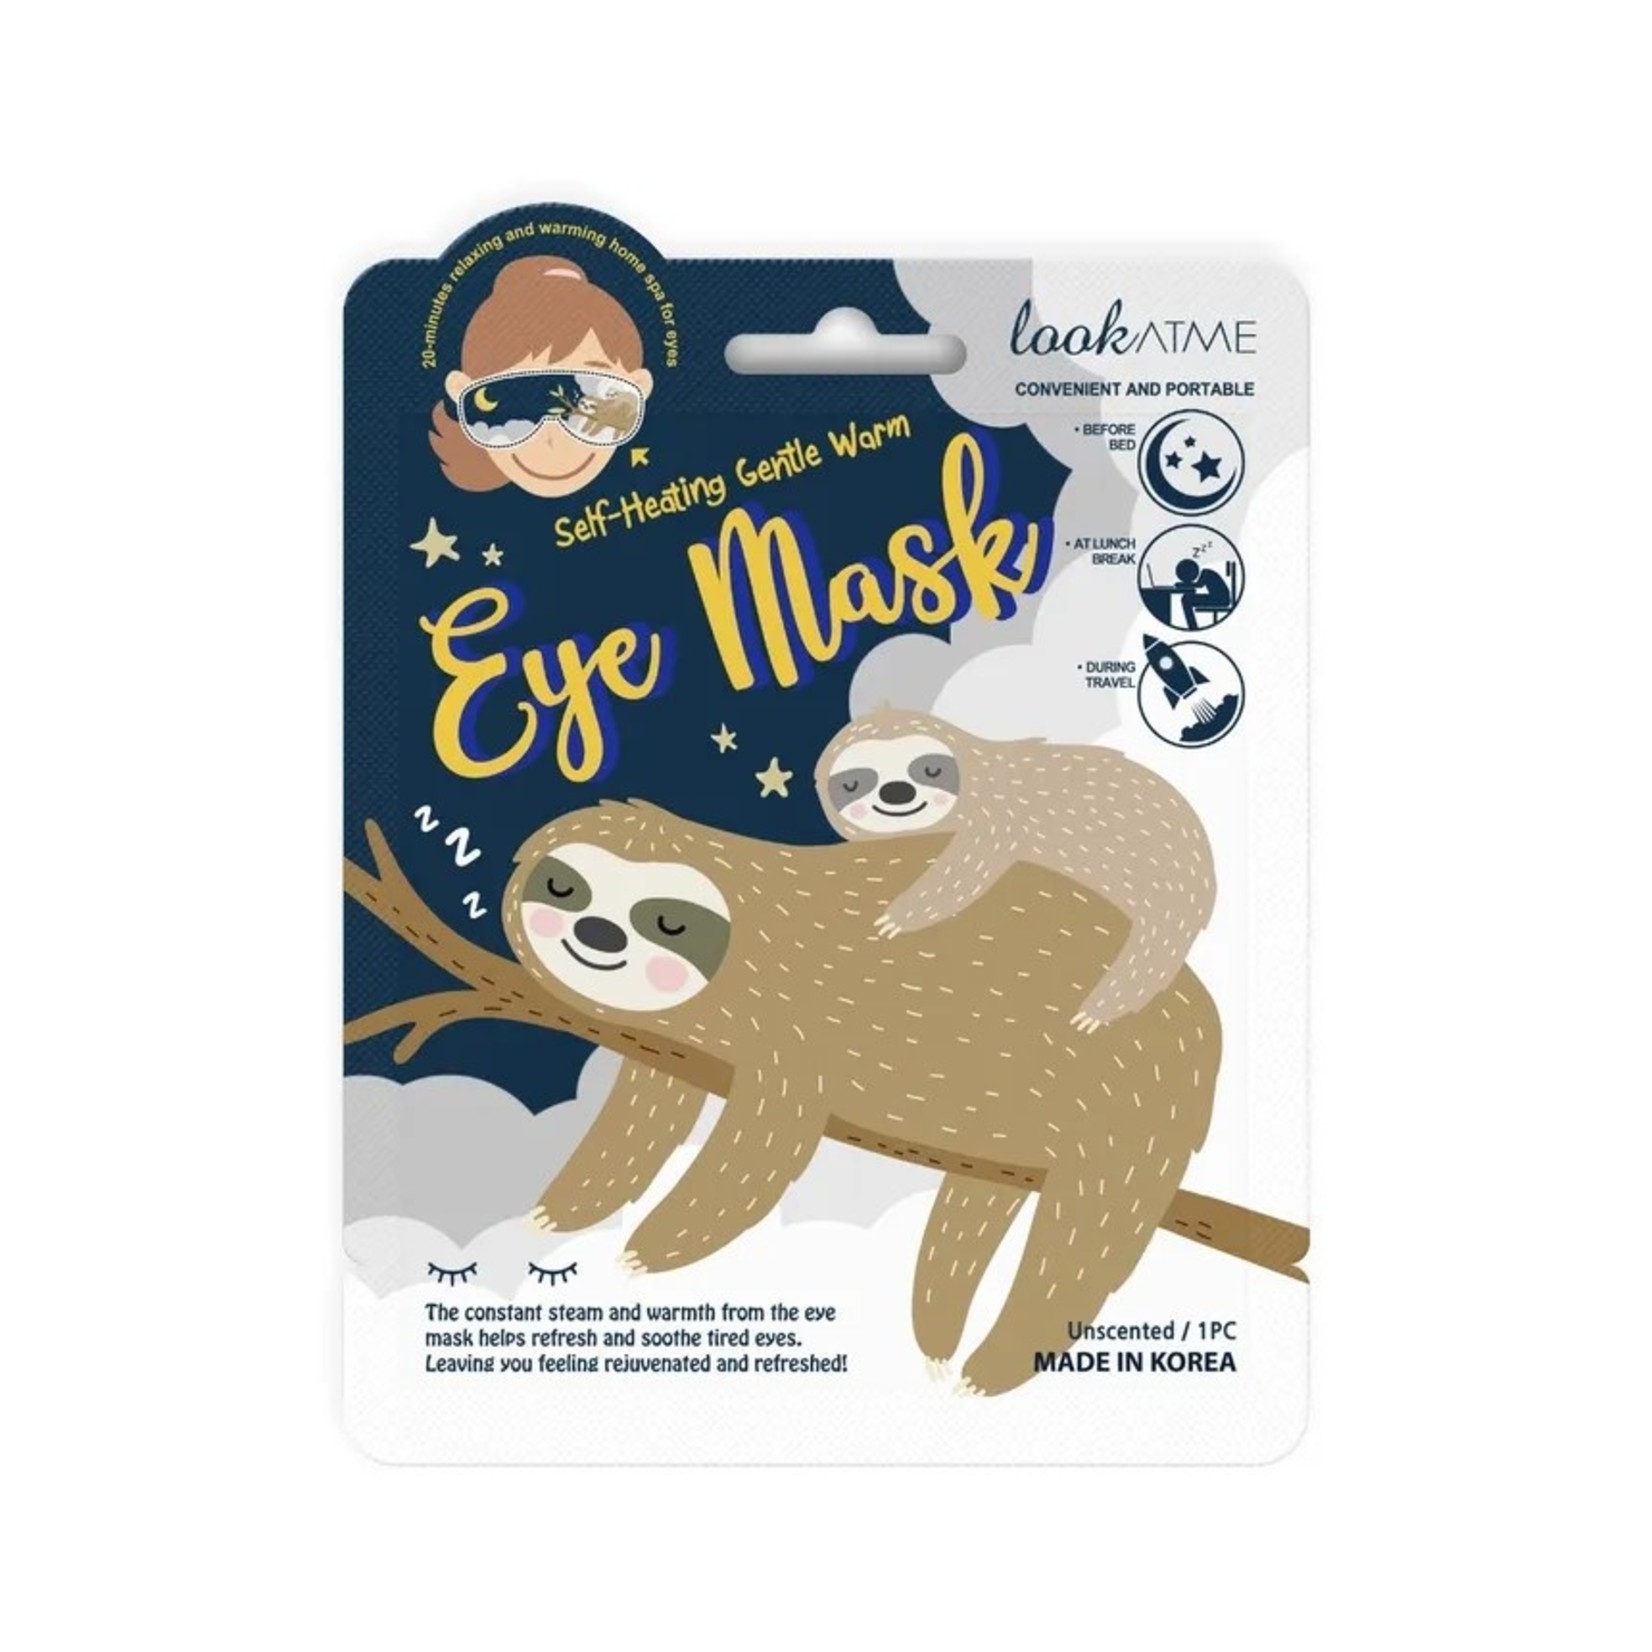 lookATME Self-Heating Gentle Warm Eye Mask